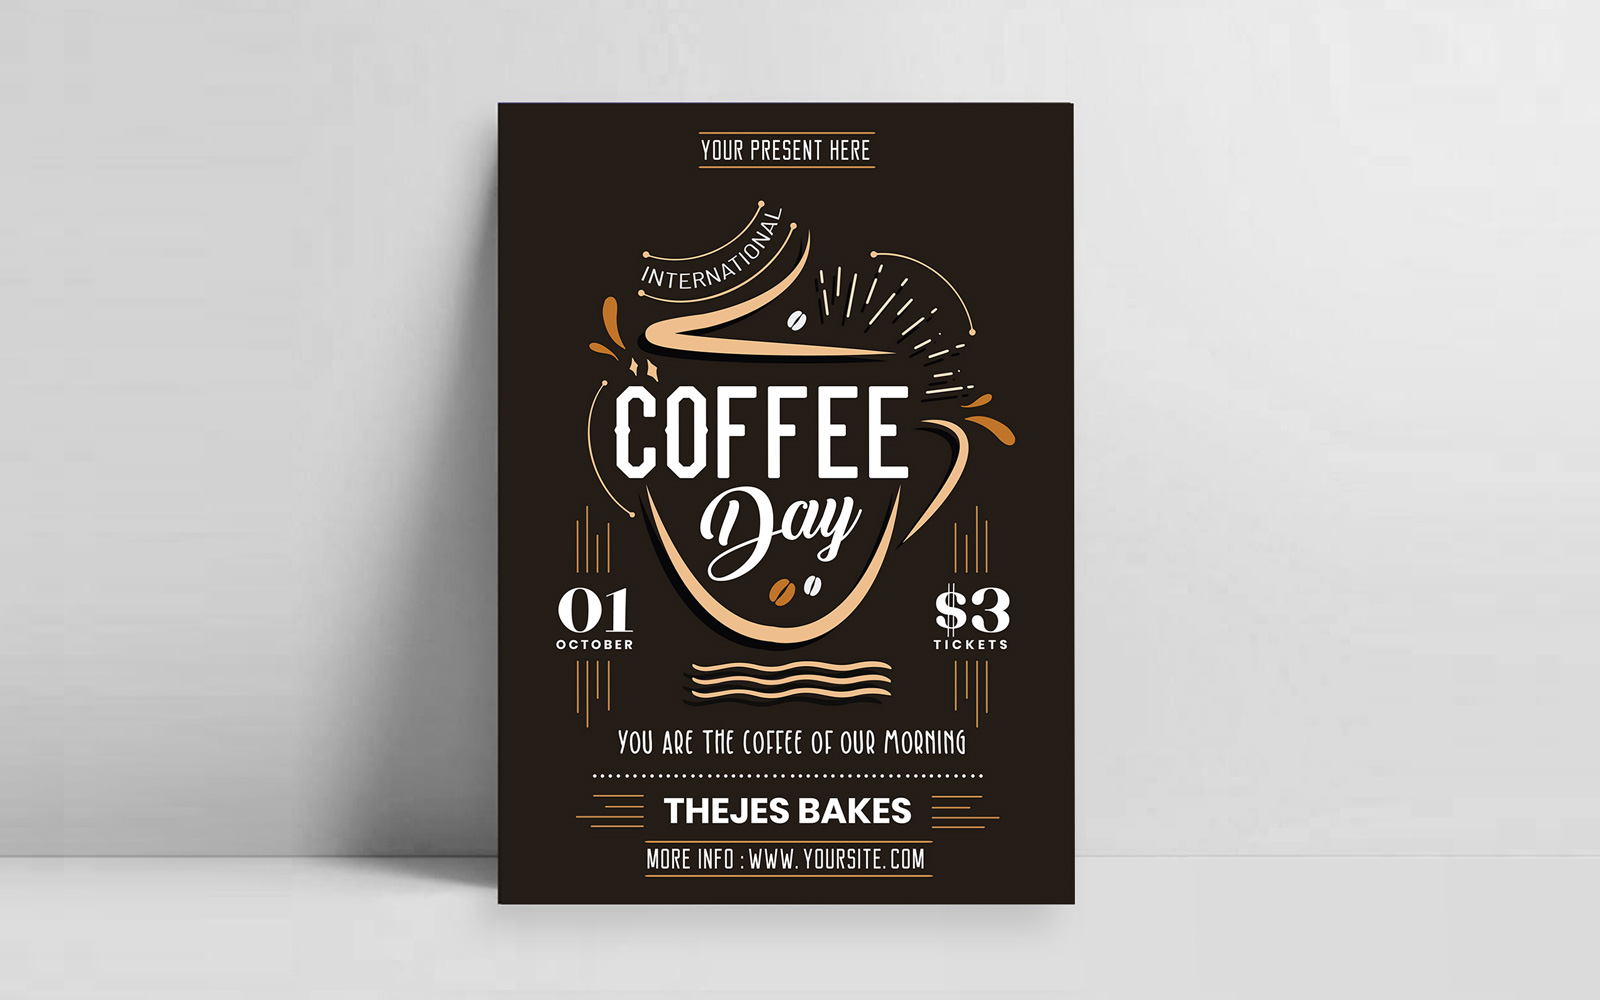 International Coffee Day - Corporate Identity Template